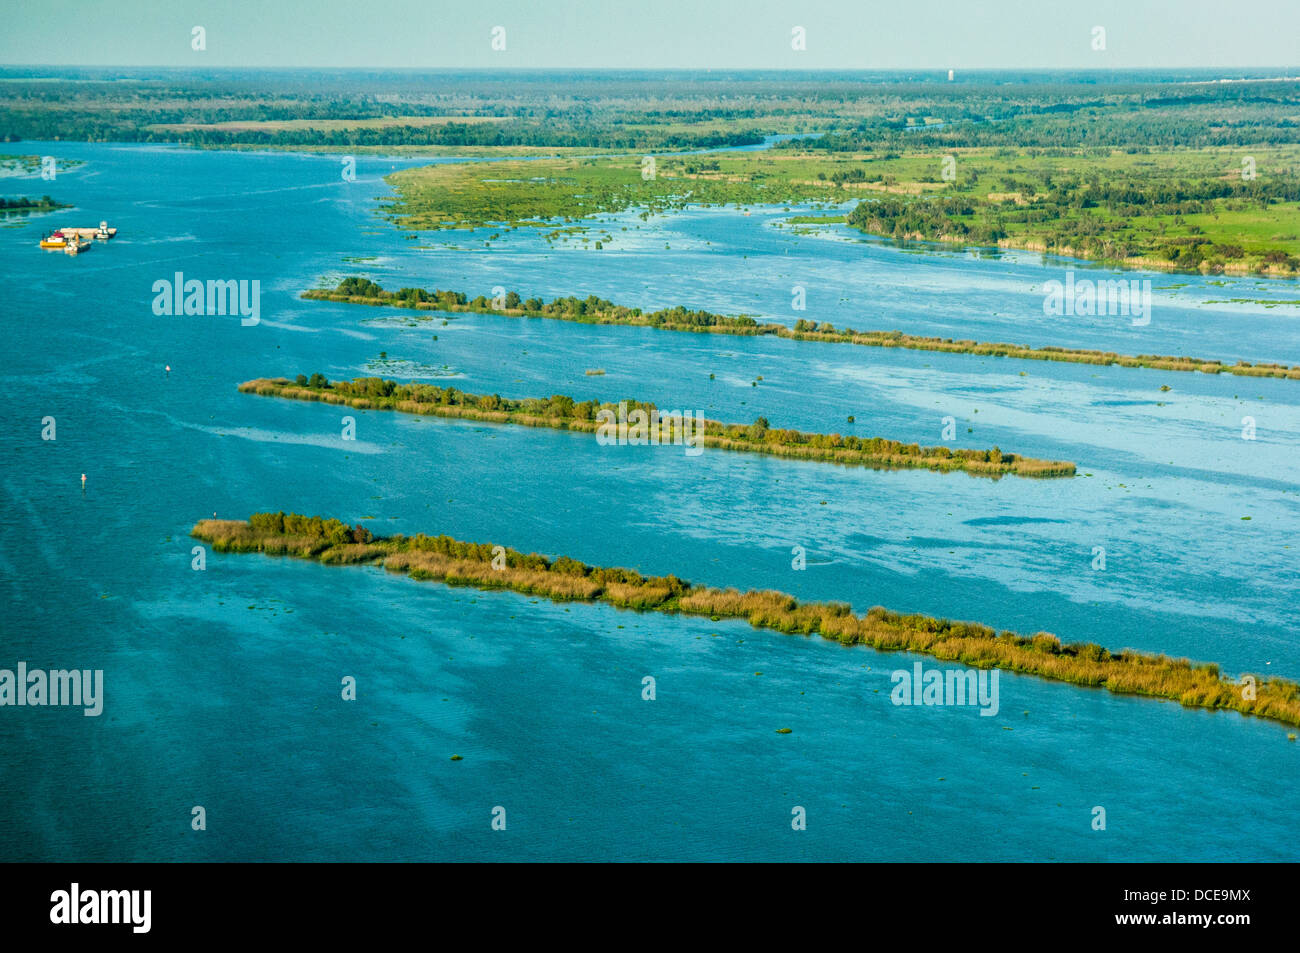 USA, Louisiana, Aerial photo of Atchafalaya Basin area, Cote Blanche Bay, man-made islands as erosion barriers. Stock Photo